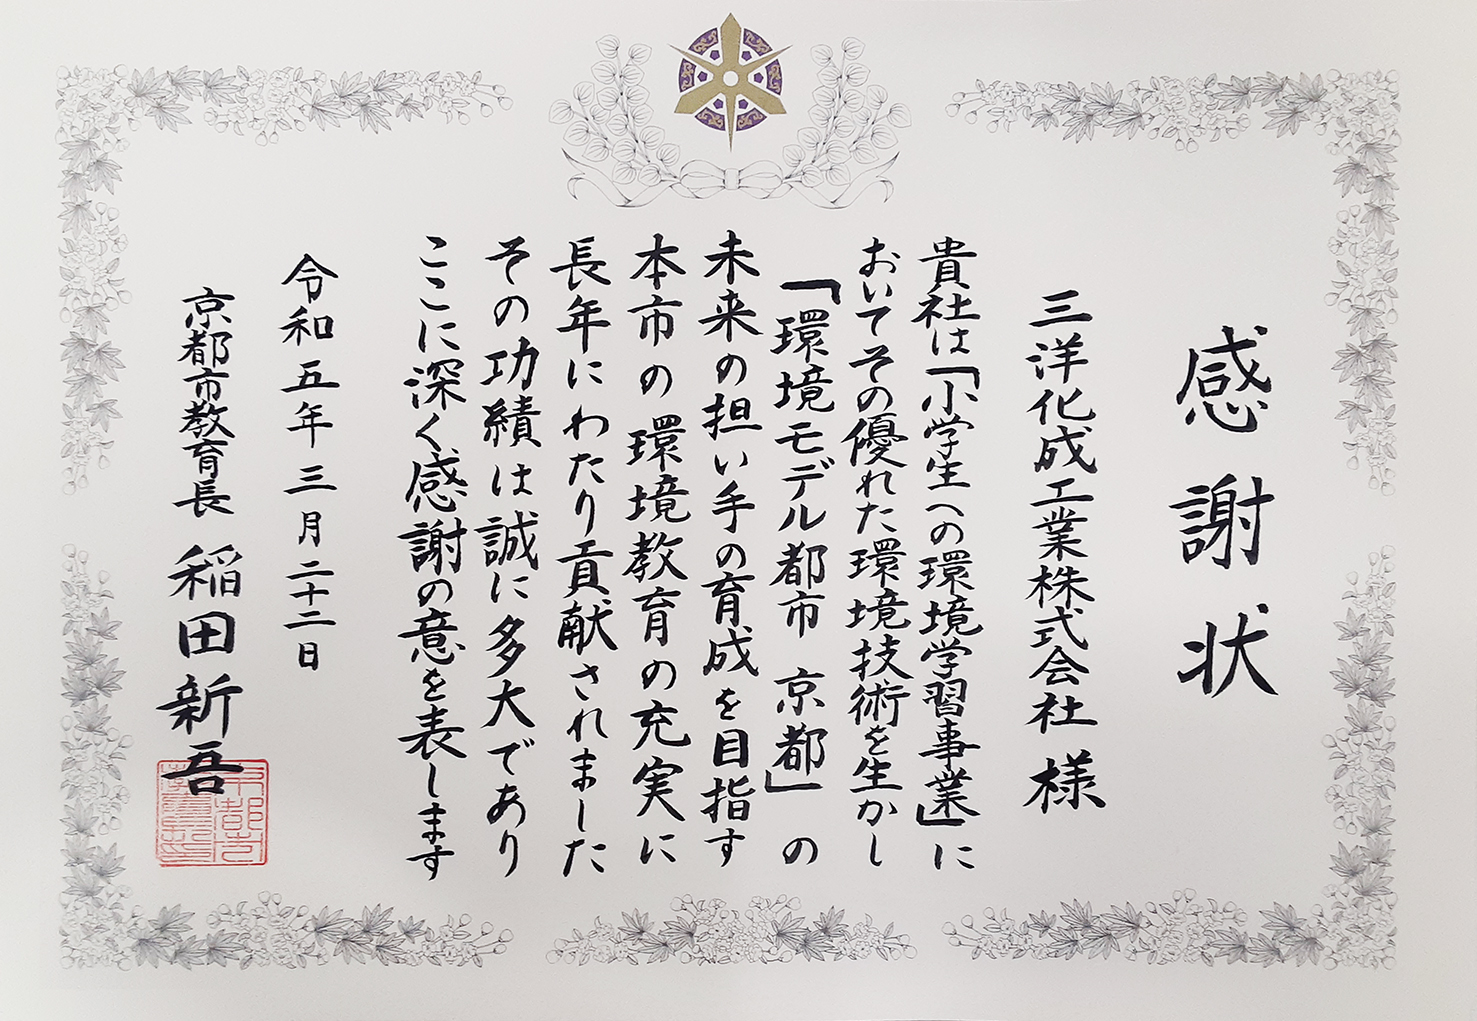 Award Certificates of Appreciation from Kyoto